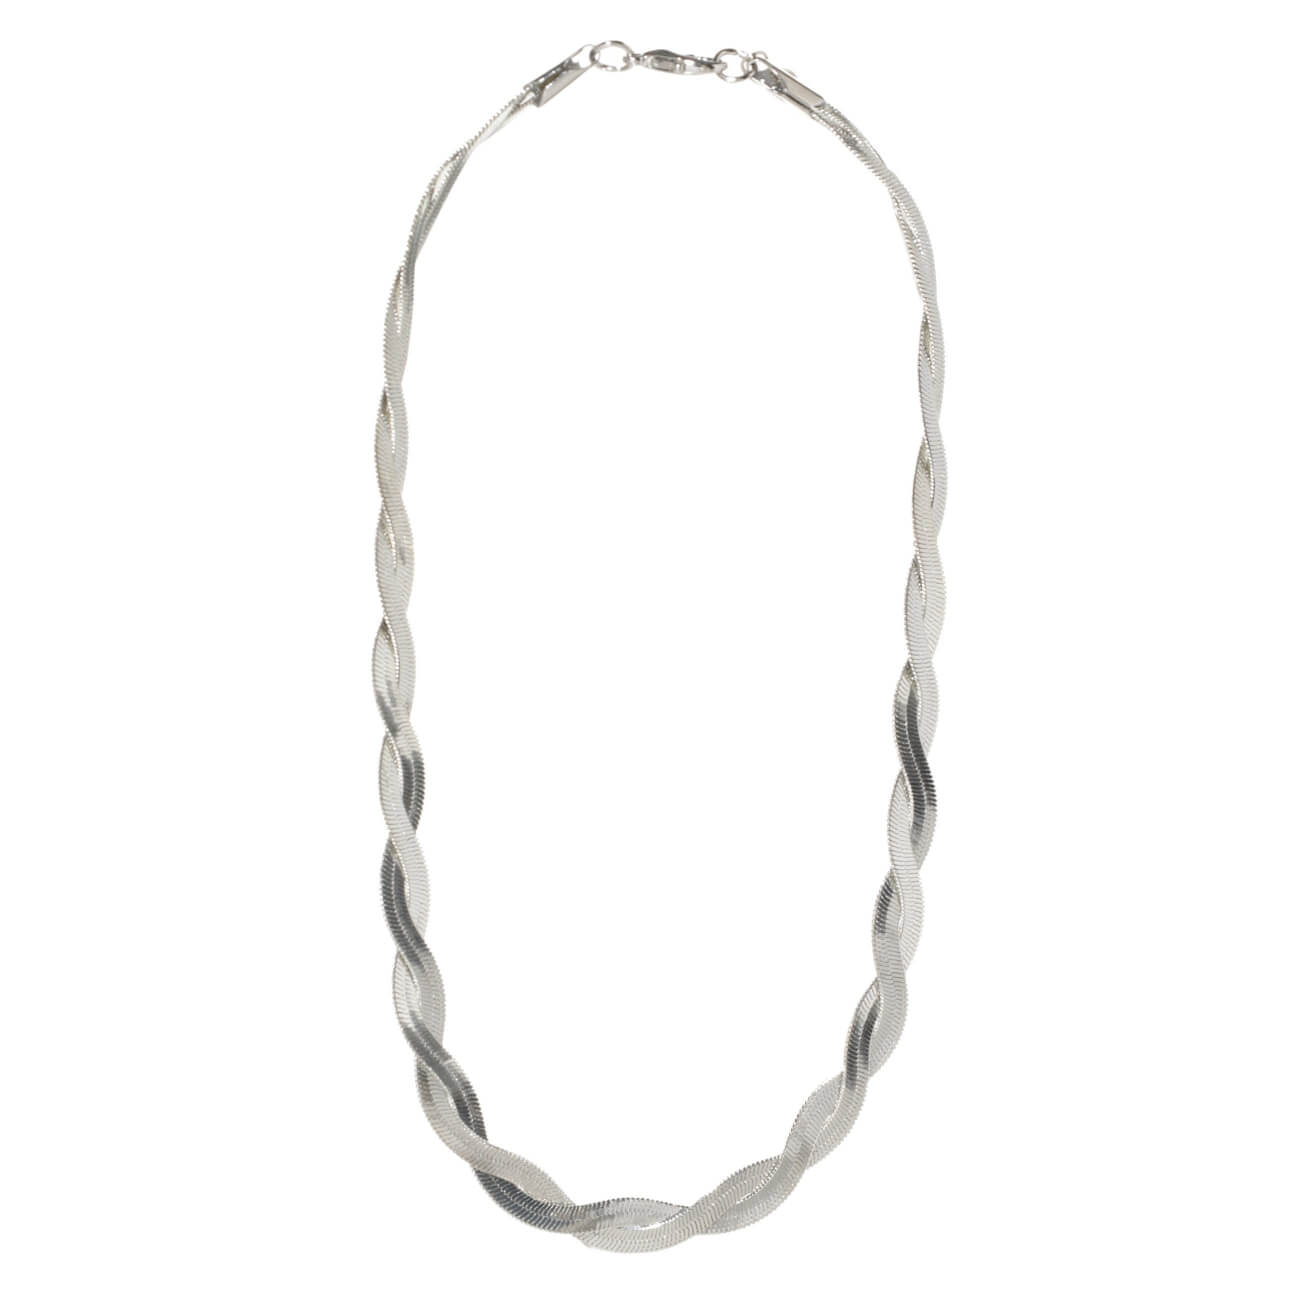 Цепочка, 45 см, двойная, металл, серебристая, Jewelry цепочка для сумки железная d 3 мм 10 ± 0 5 м серебряный